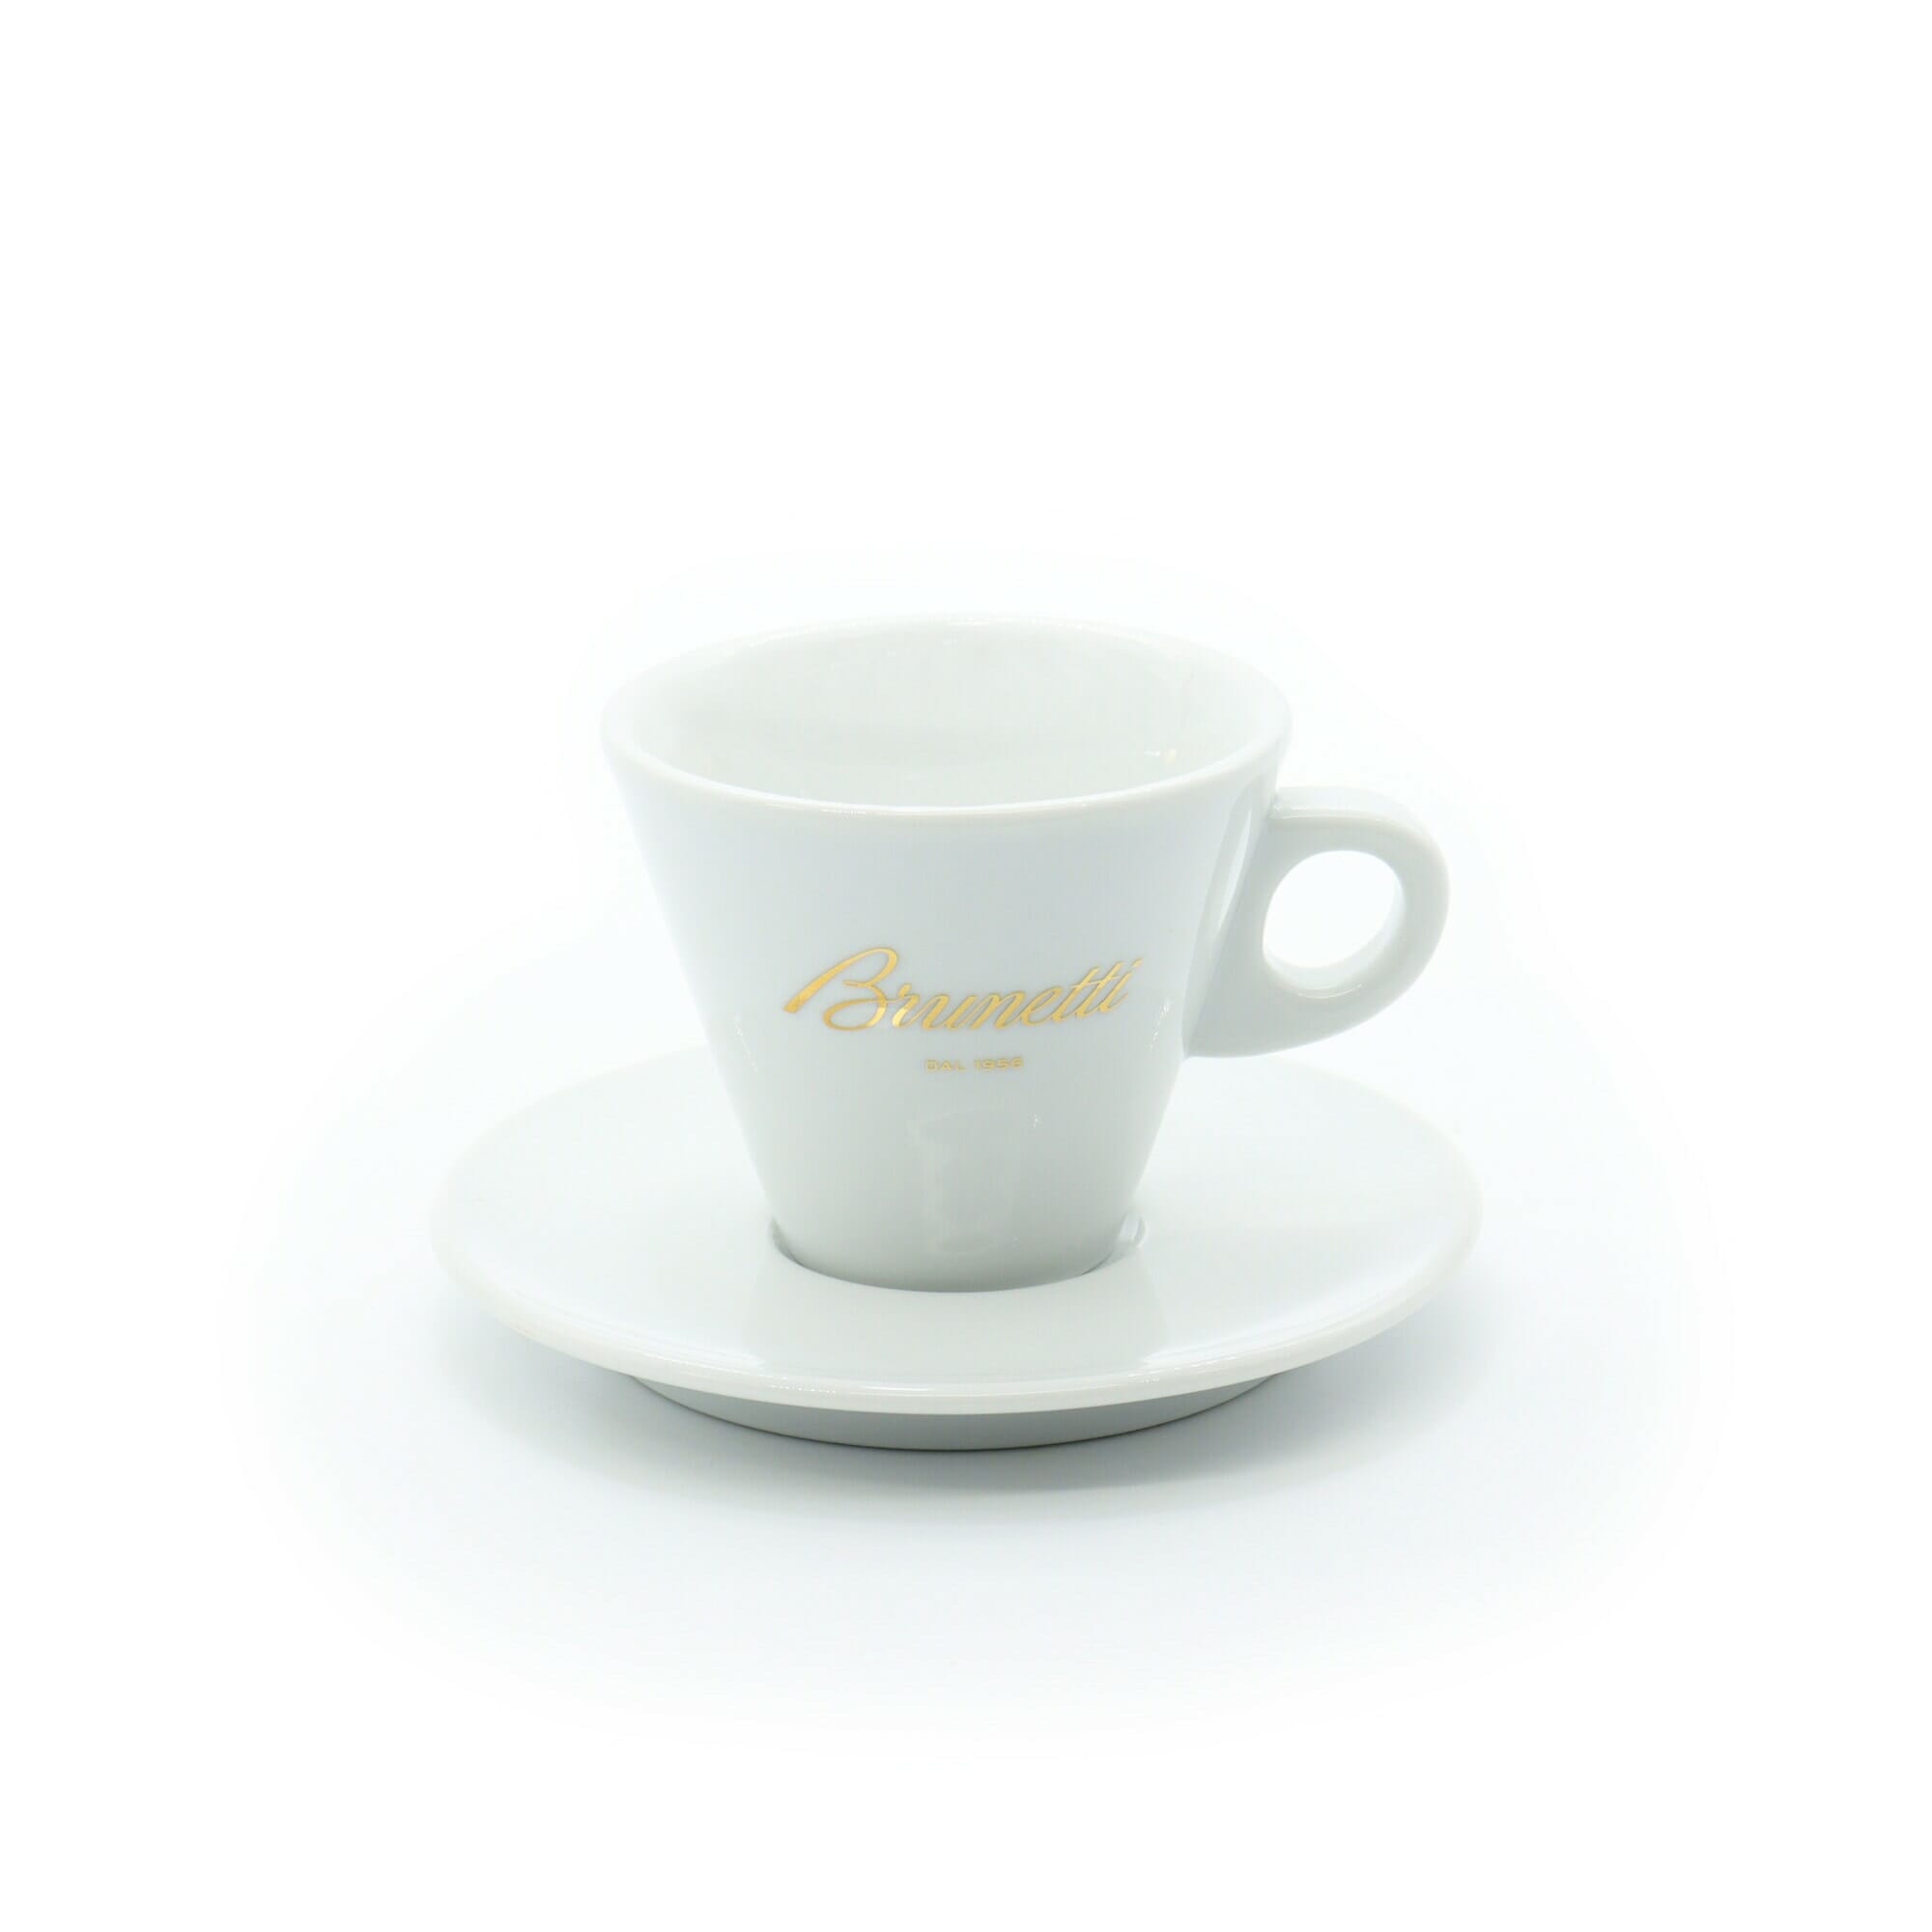 https://brunettioro.com.au/wp-content/uploads/2021/09/Brunetti-Ipa-Cappuccino-Porcelain-Cup_1.jpg